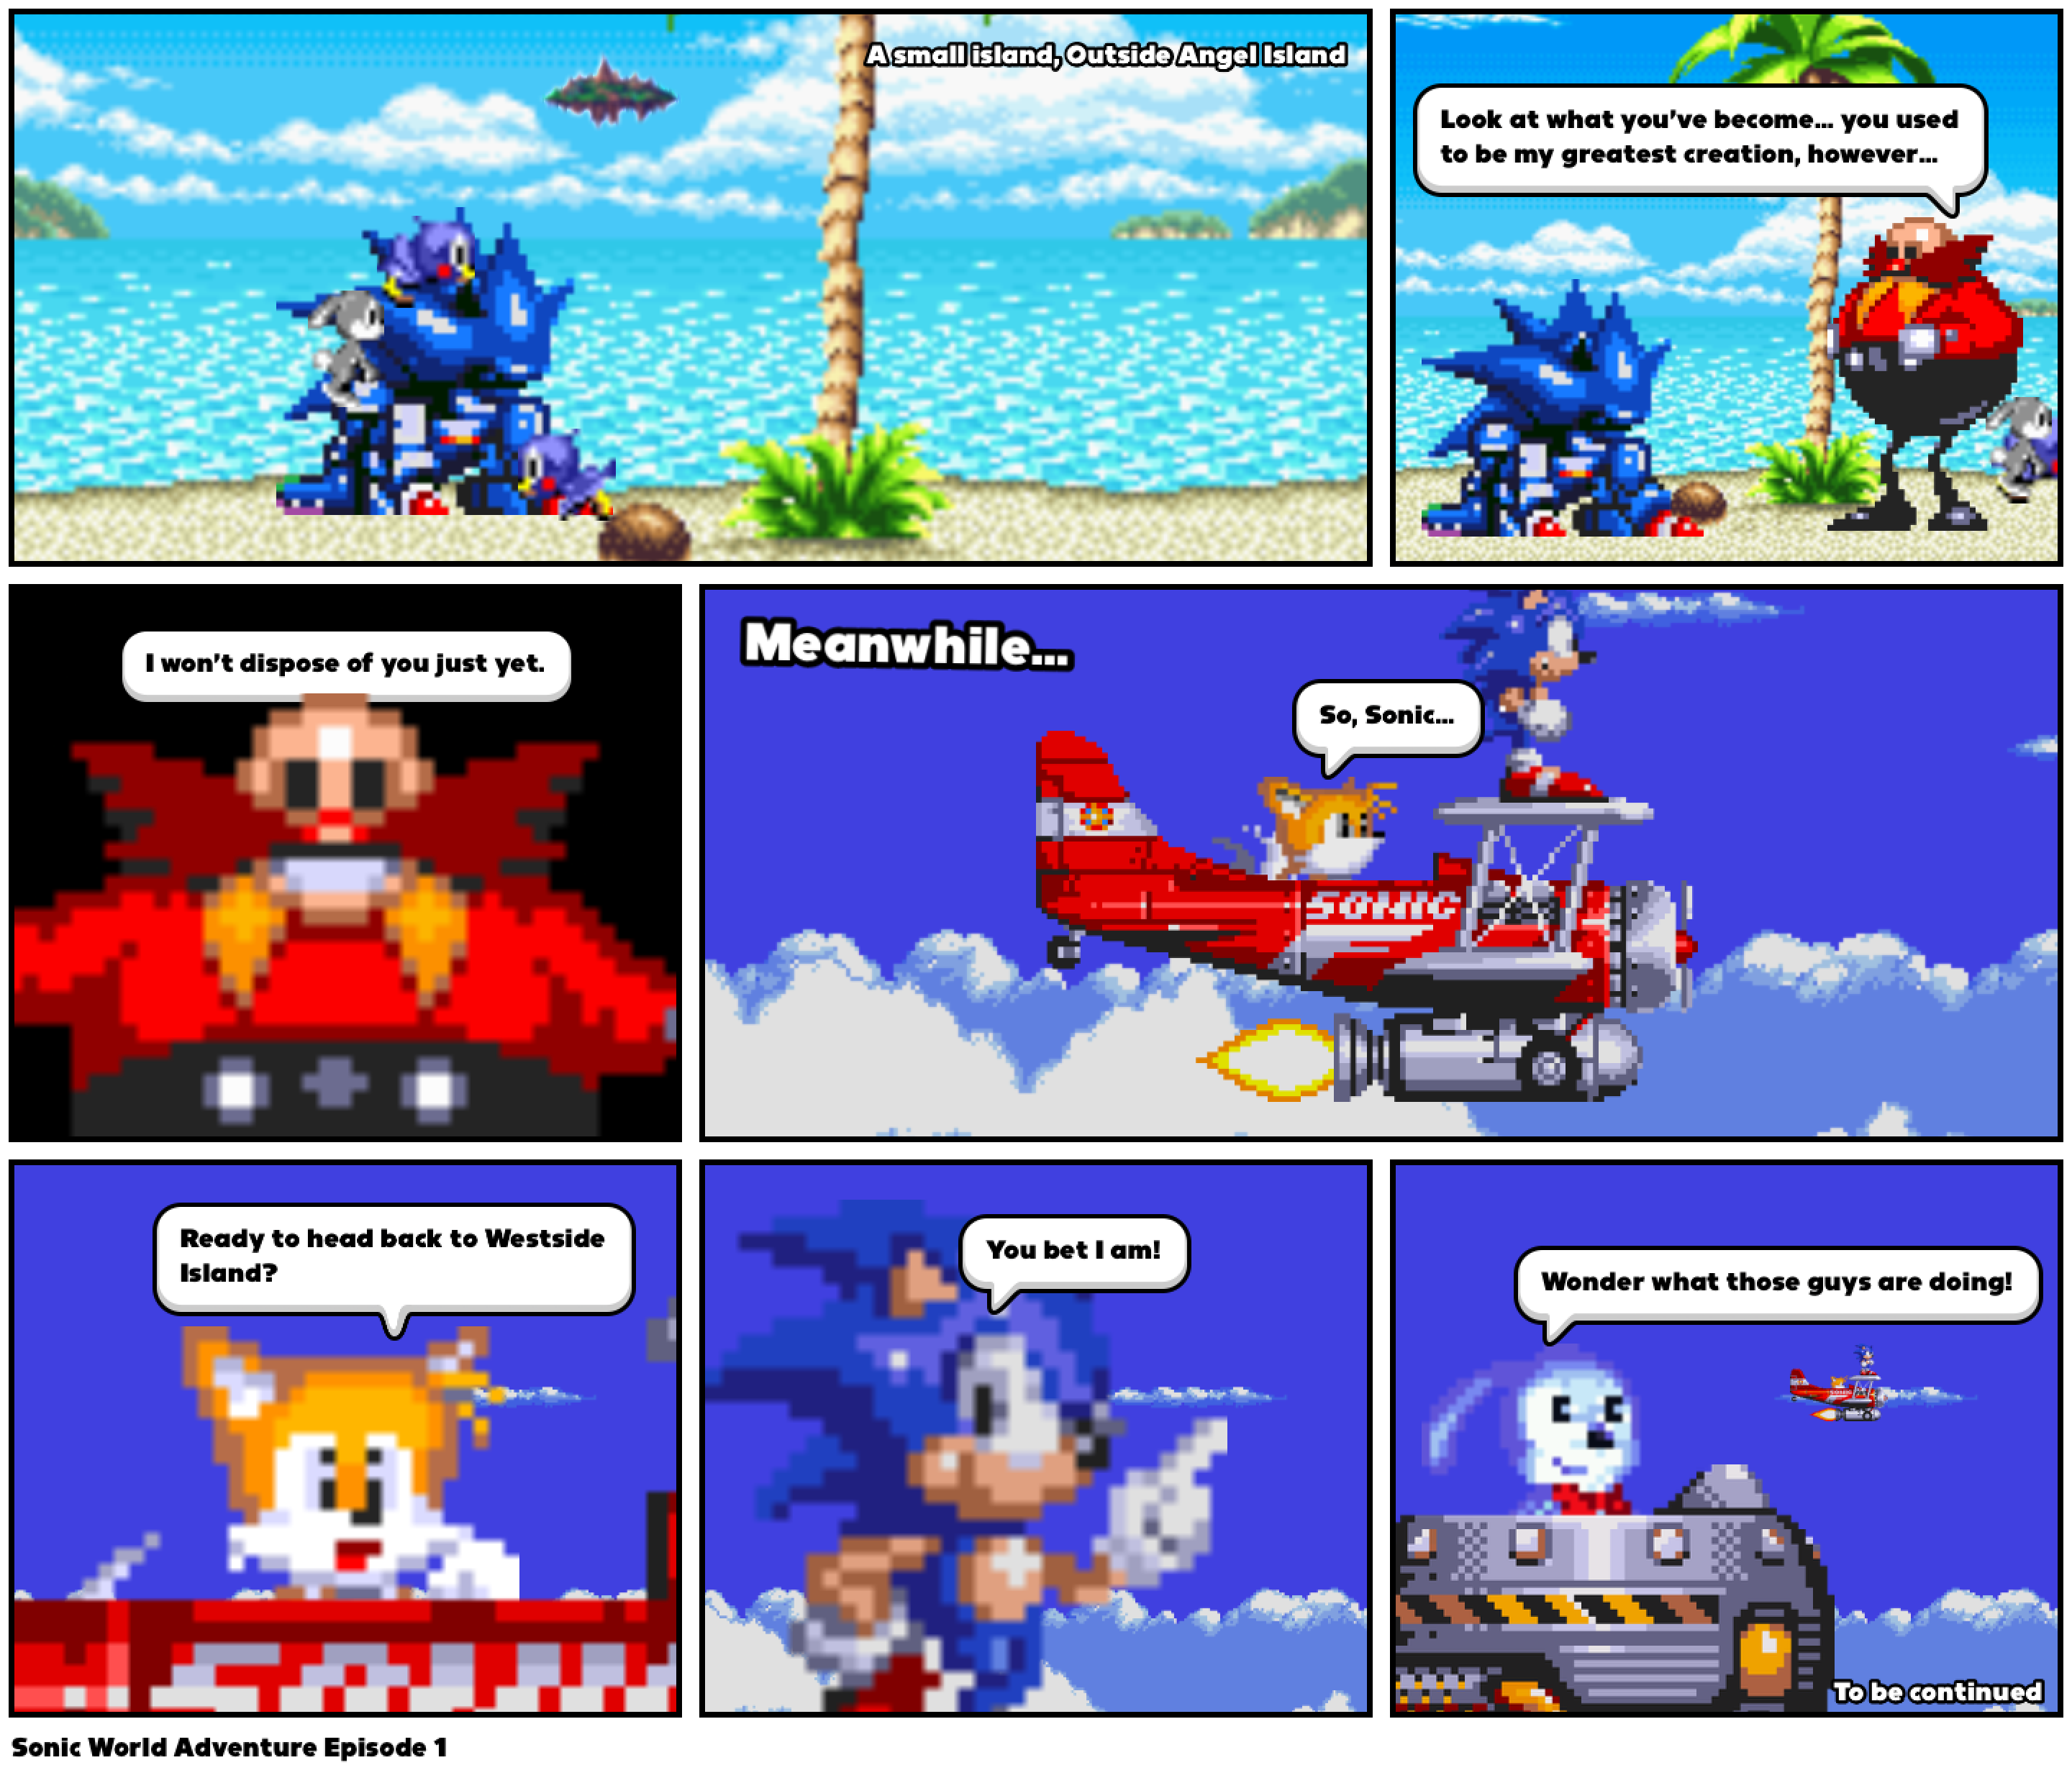 Sonic World Adventure Episode 1